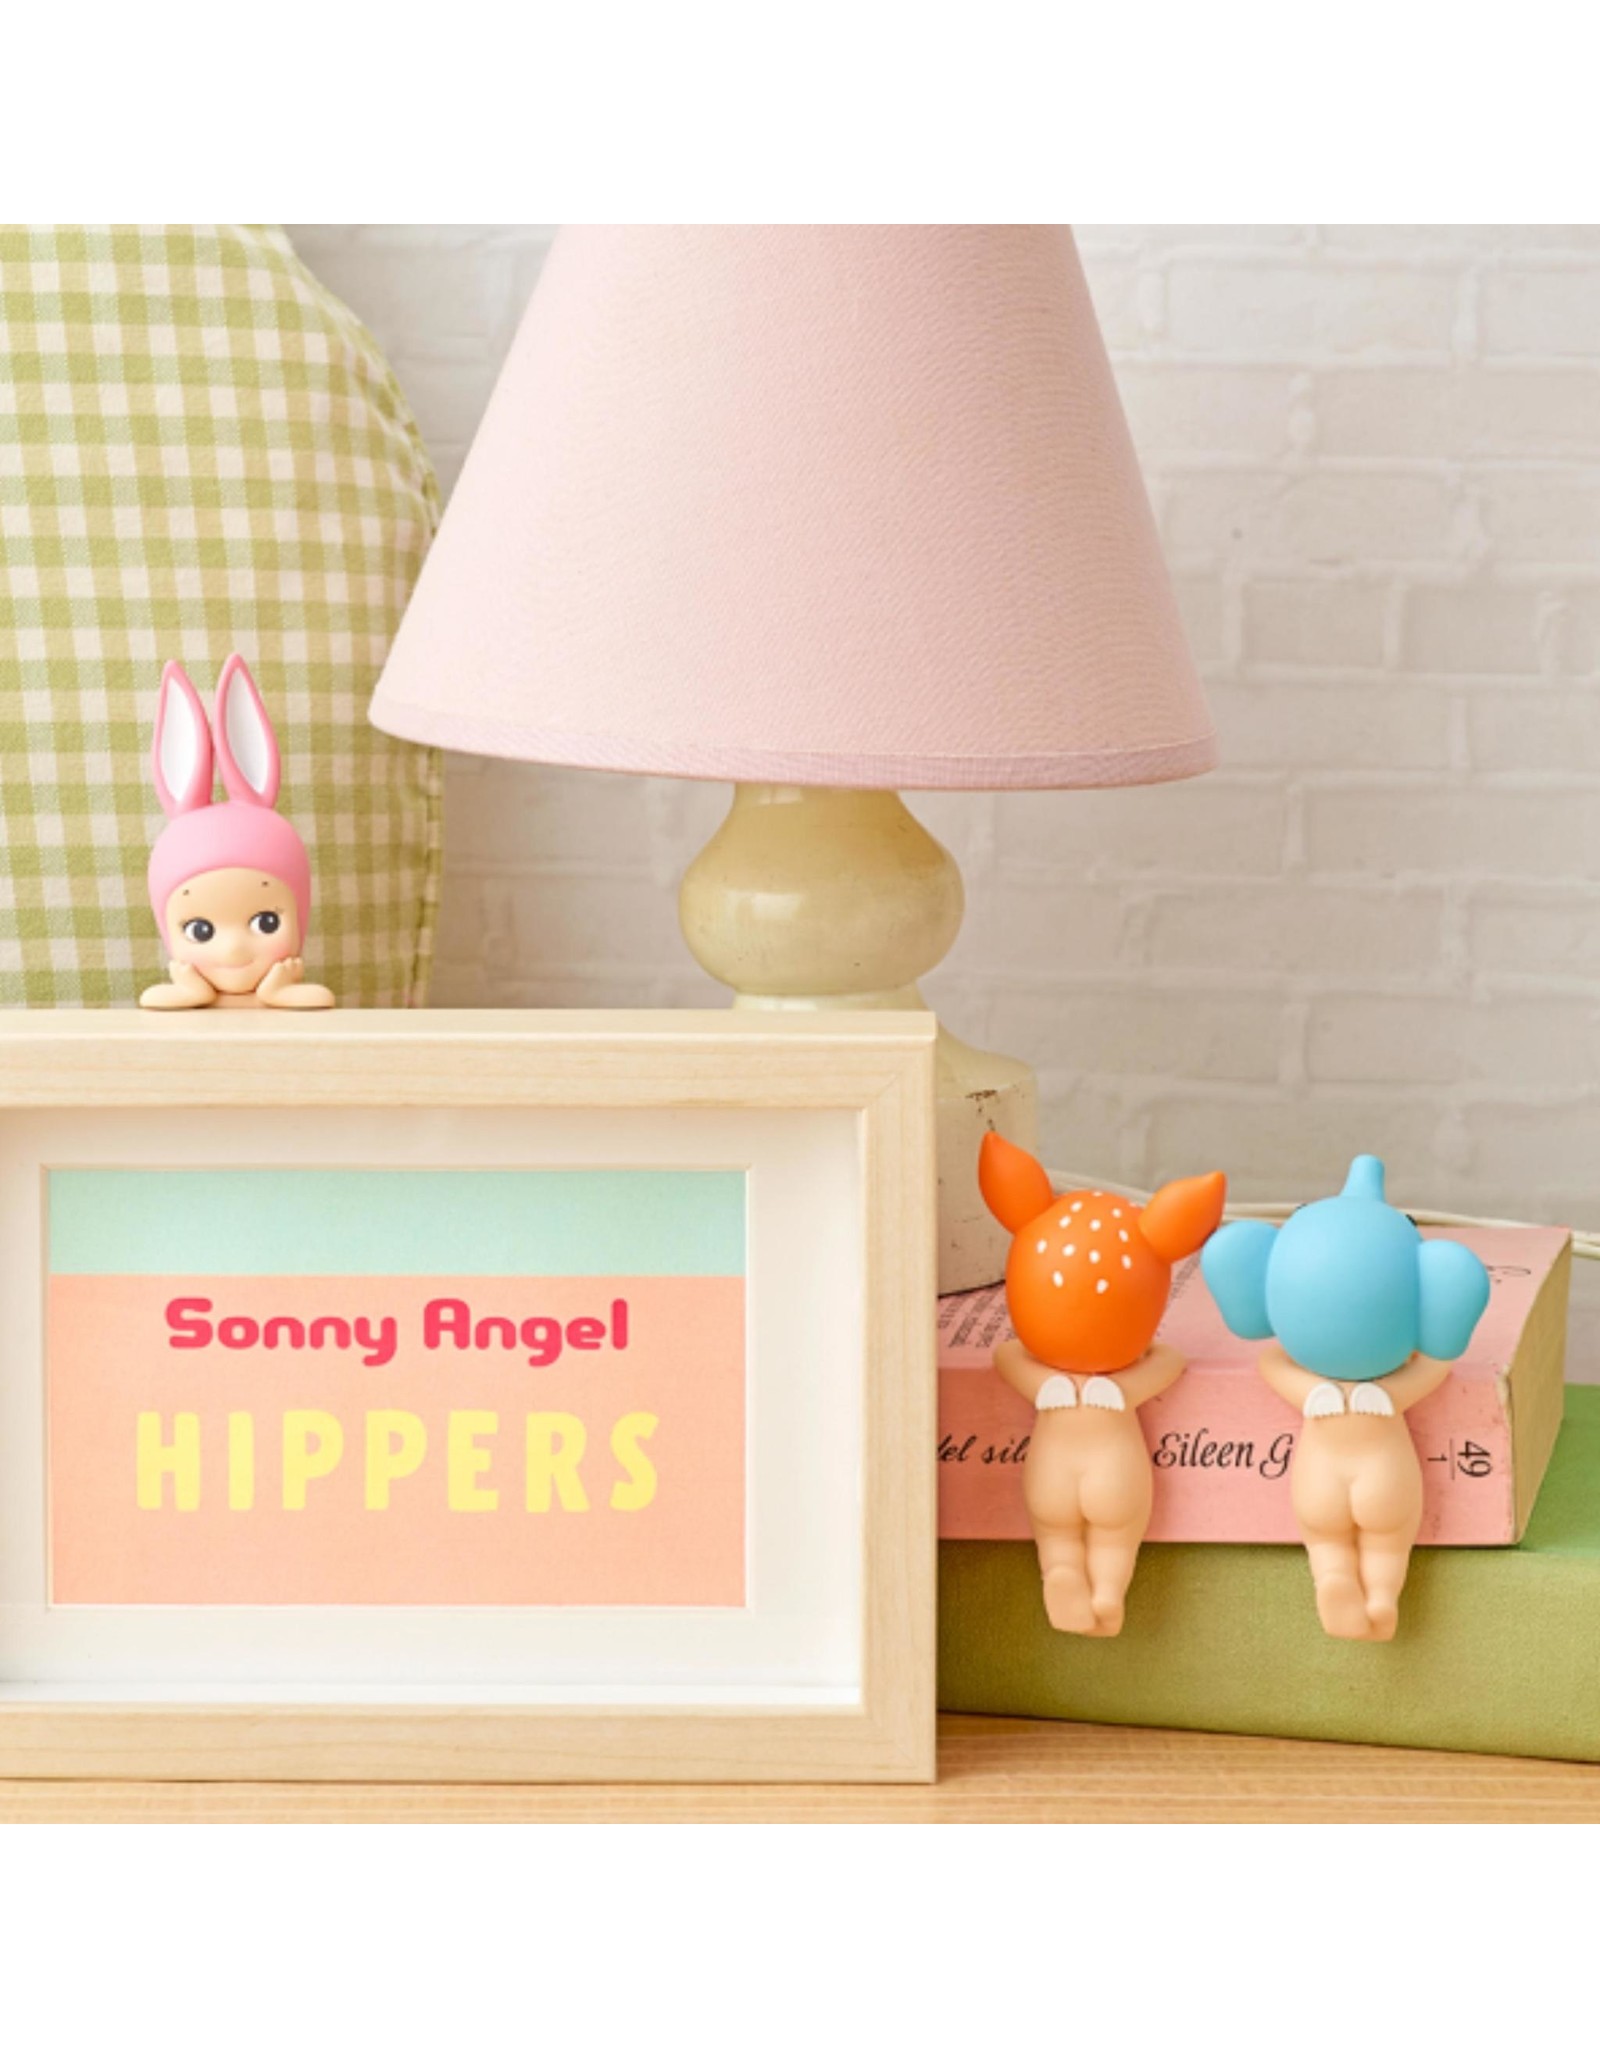 Sonny Angel Hippers Serie - Box van 12